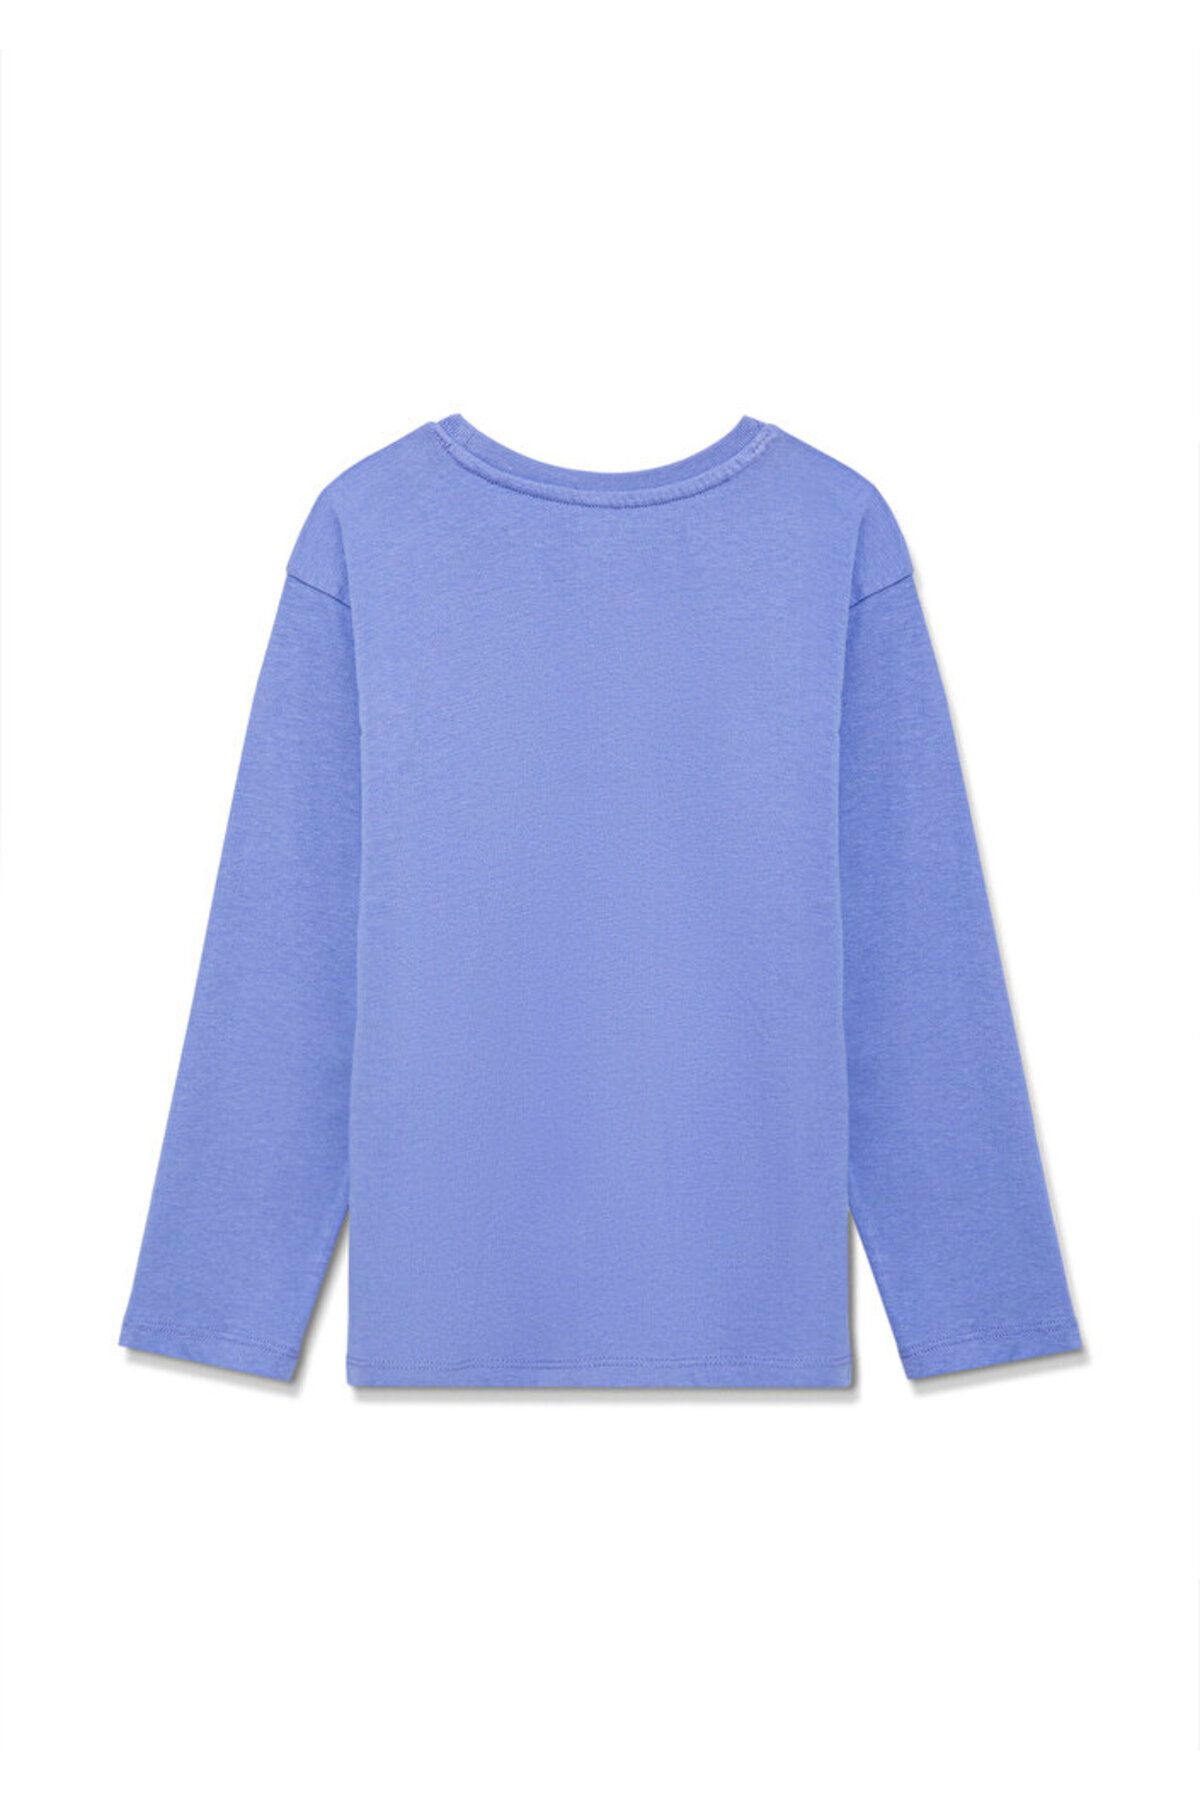 Mavi تی شرت آستین بلند یاسی چاپ شده با طرح معمولی / برش 7610120-70558